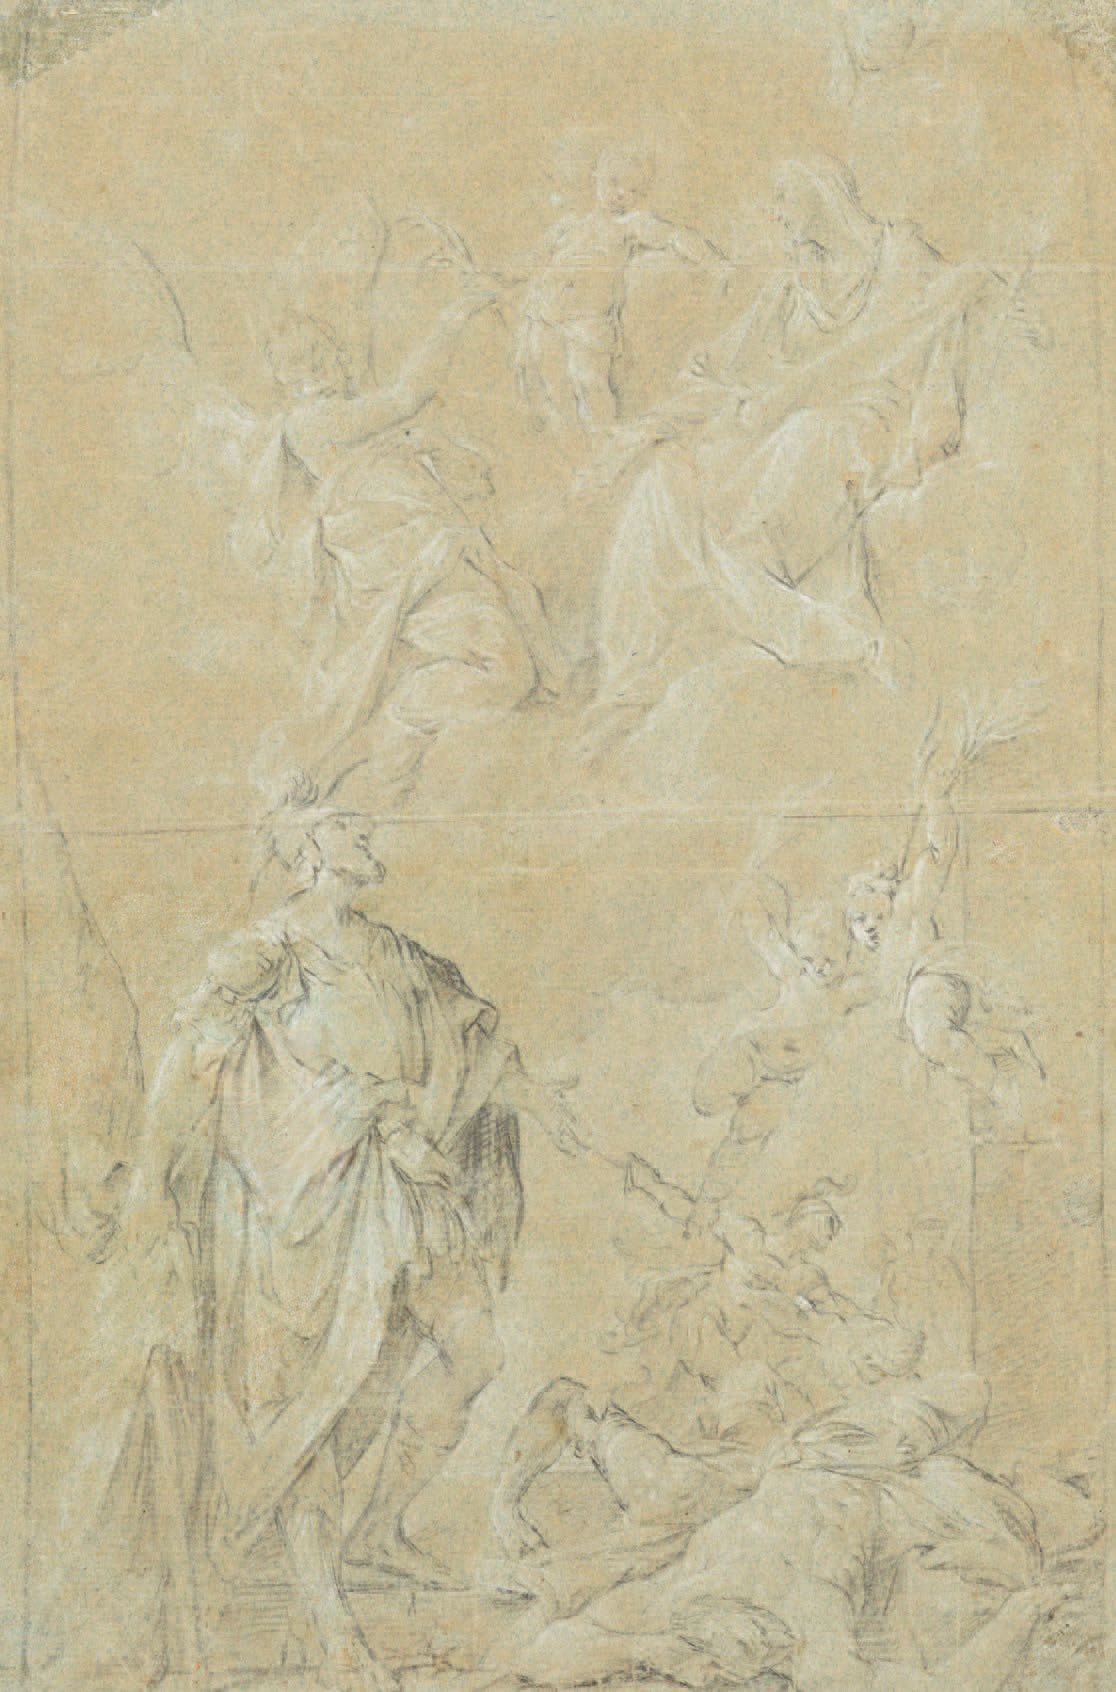 Francesco Monti (1685-1768) 
圣母子耶稣和圣人莫里斯为结束瘟疫流行而求情
黑石，白铅(pliures, restorations)
&hellip;